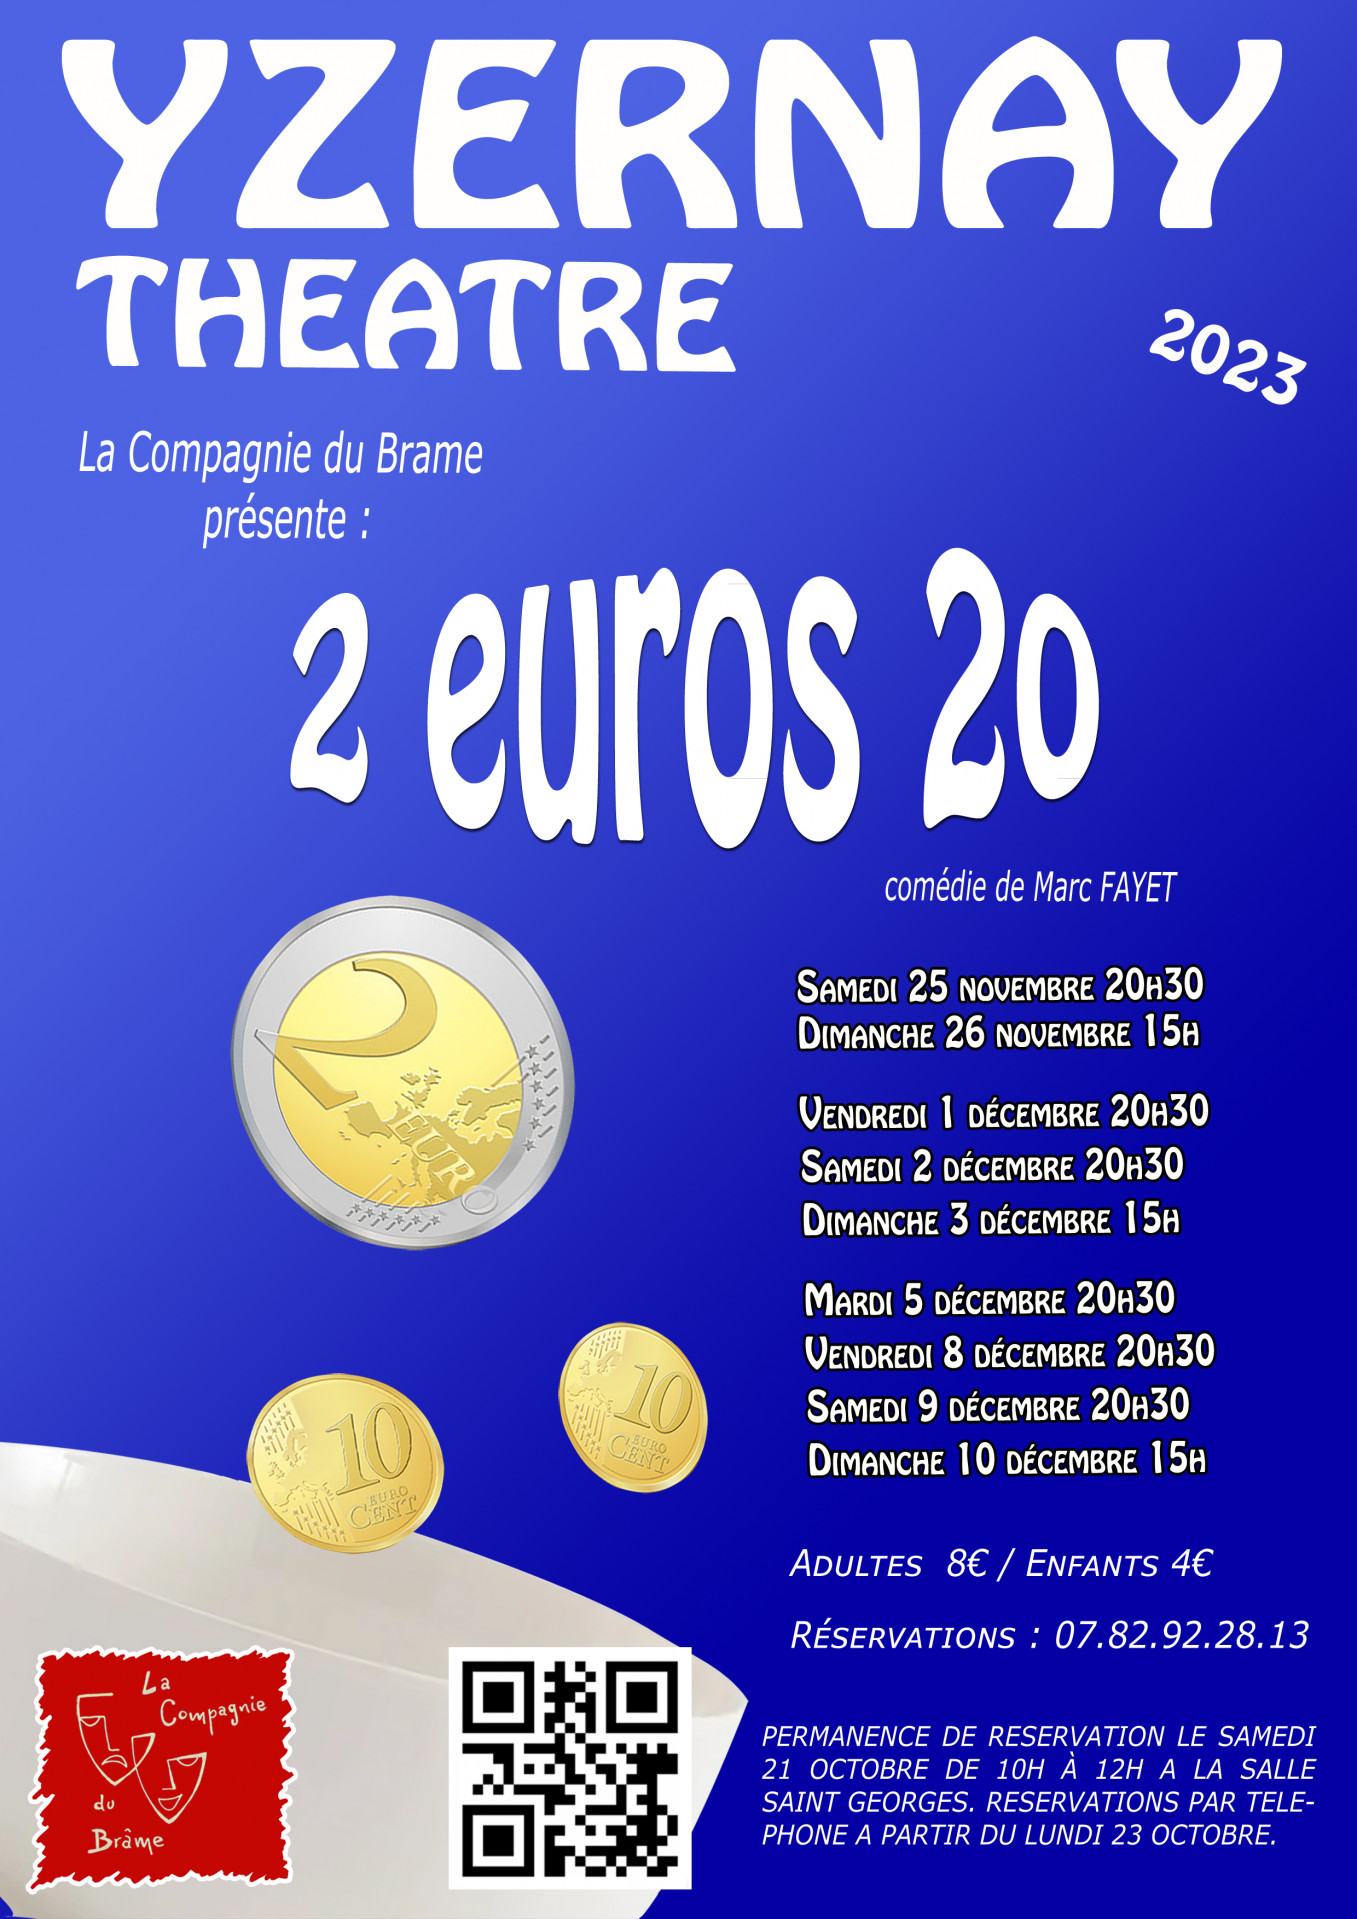 theatre-yzernay-compagnie-du-brame-49